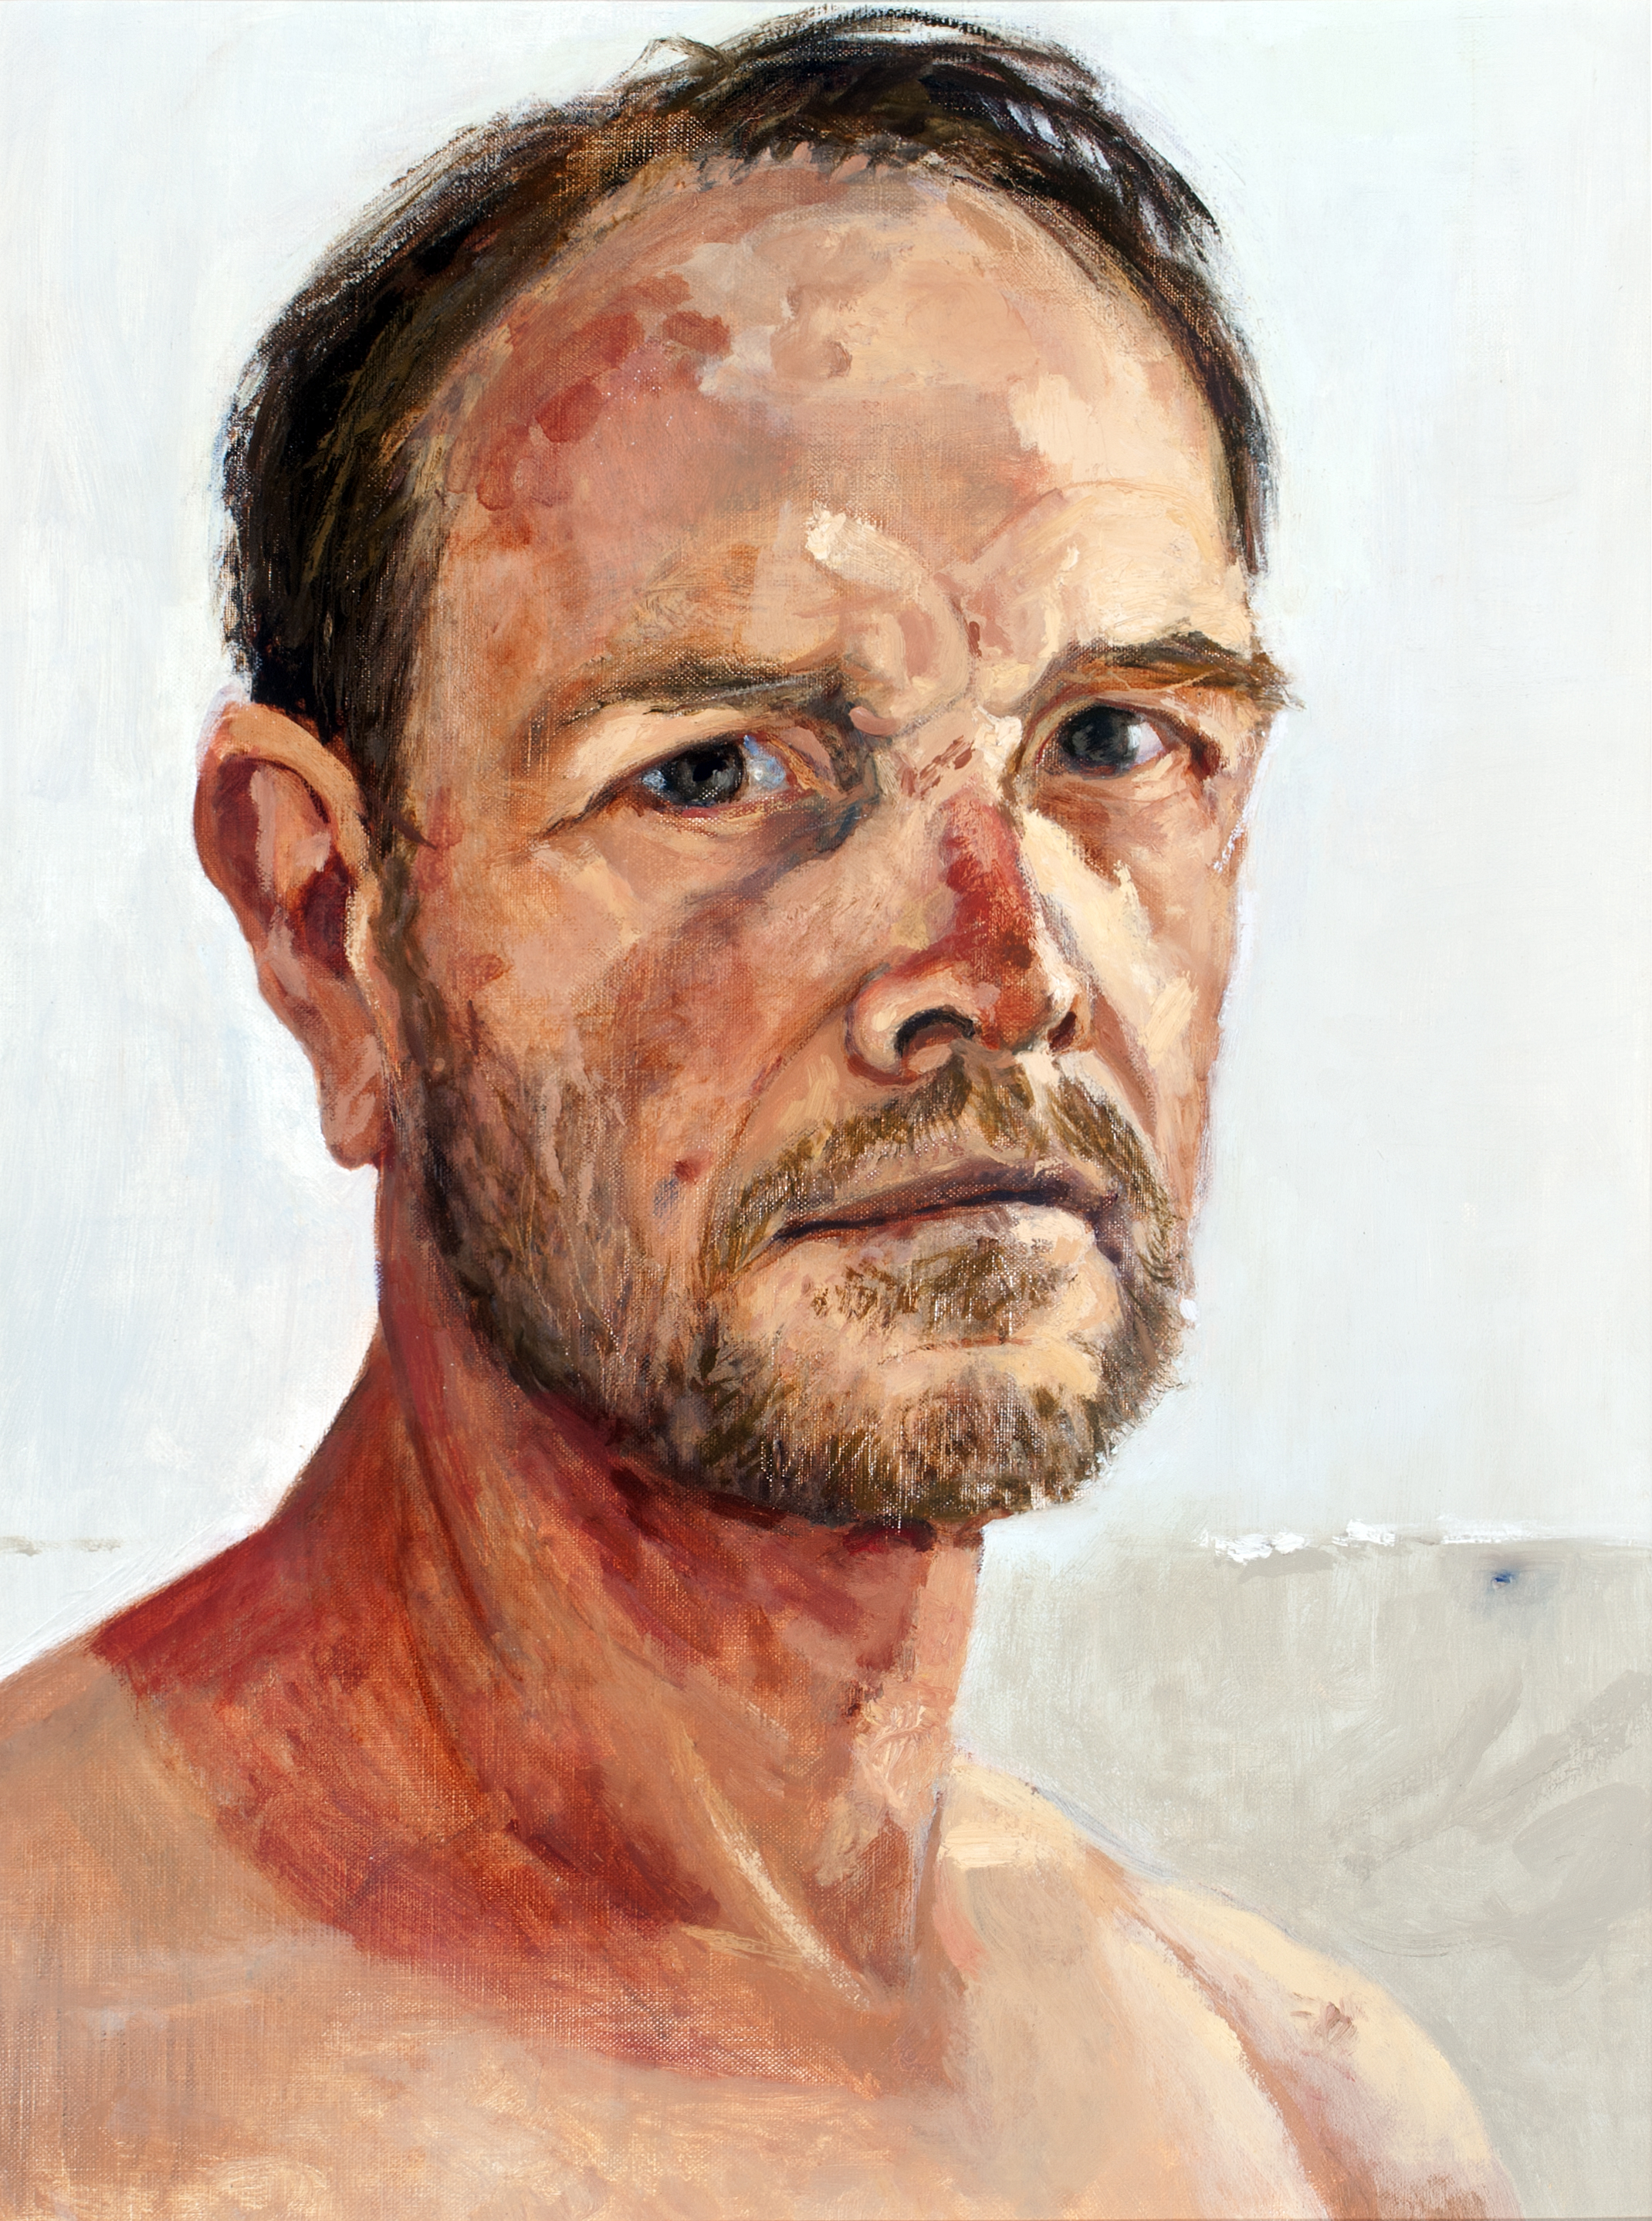 Self-portrait with sun damage 2014 Sayers